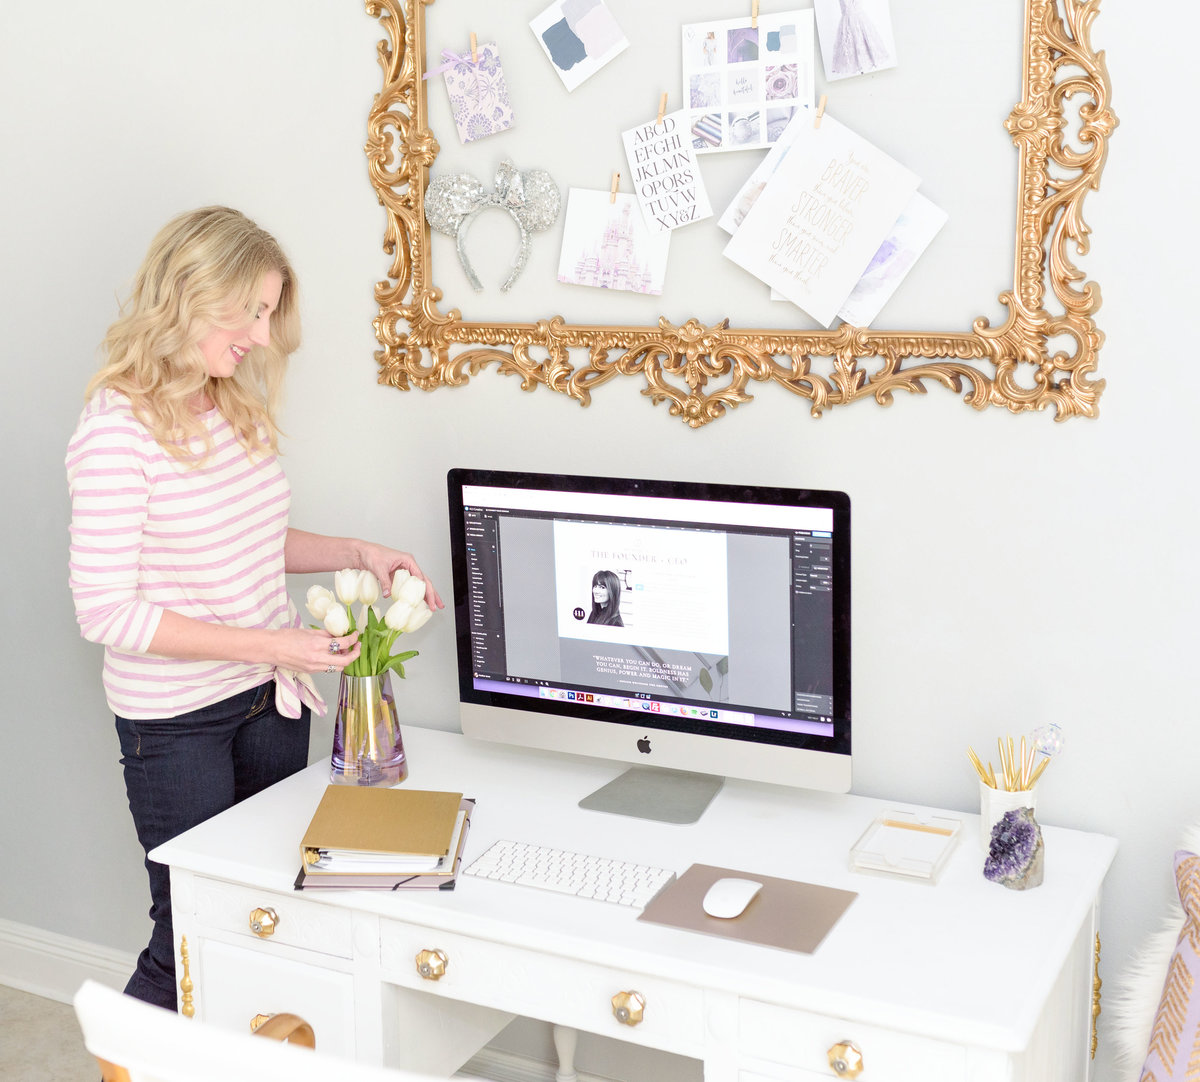 Showit Websites for Creatives & Coaches | Heather Jones at Desk